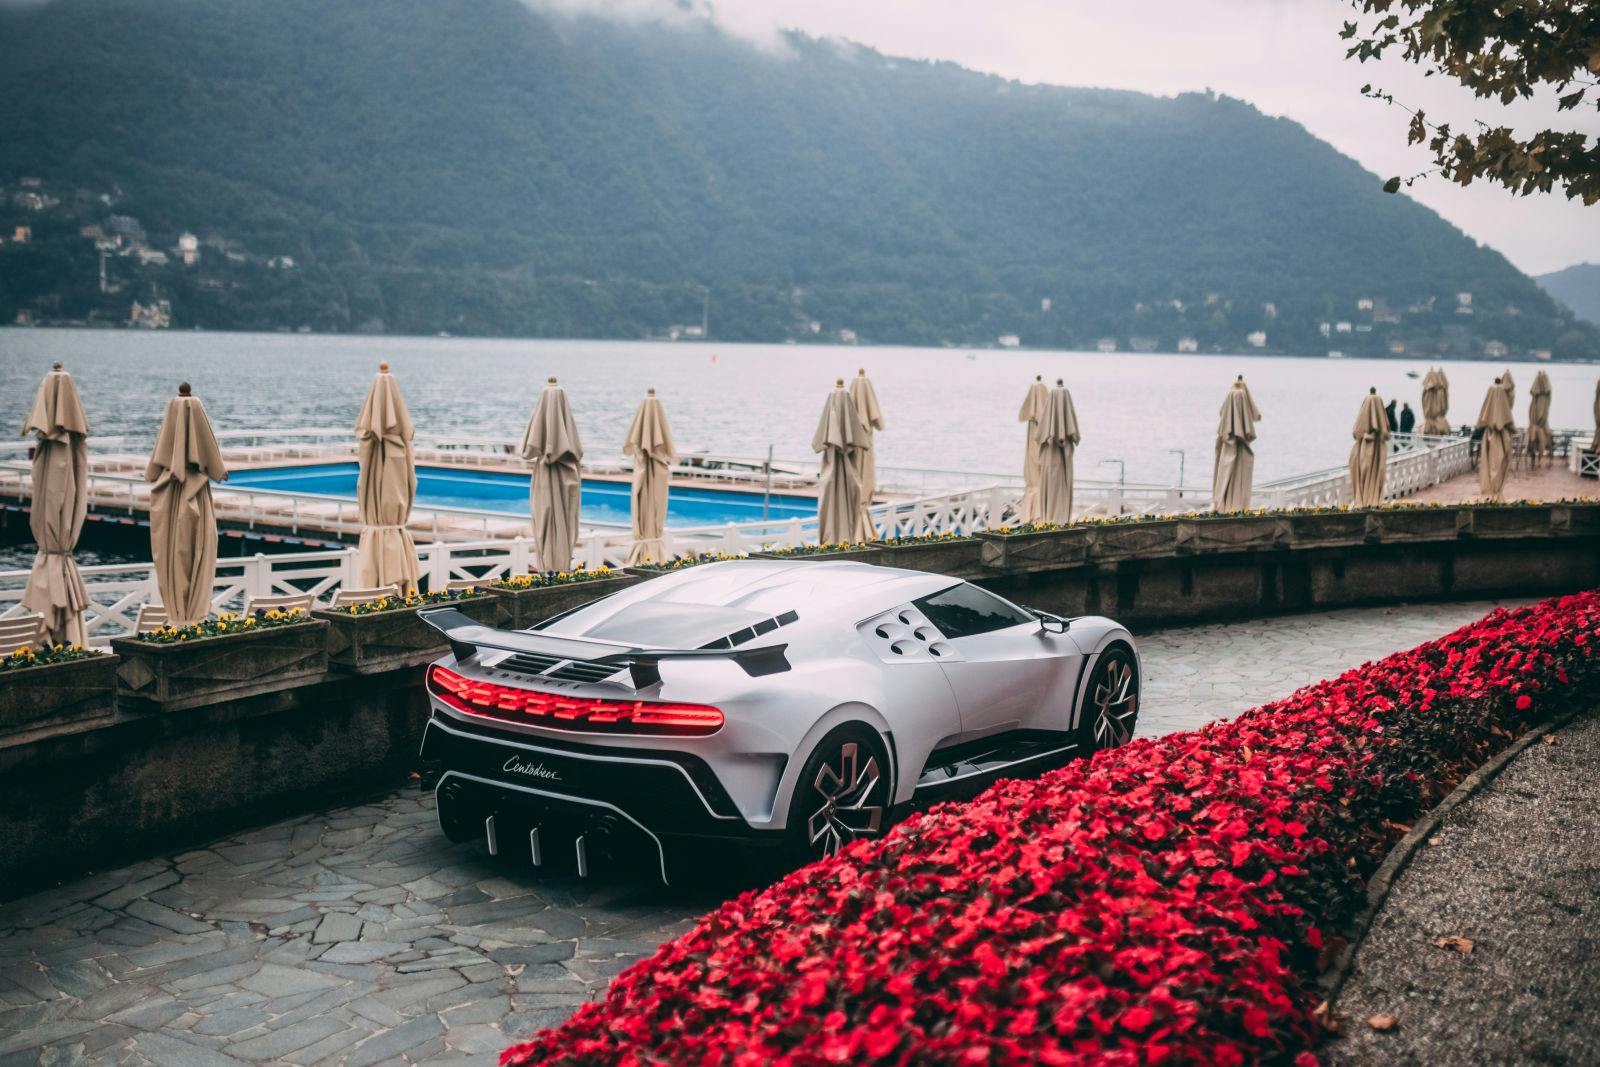 The Centodieci against the impressive backdrop of Lake Como.